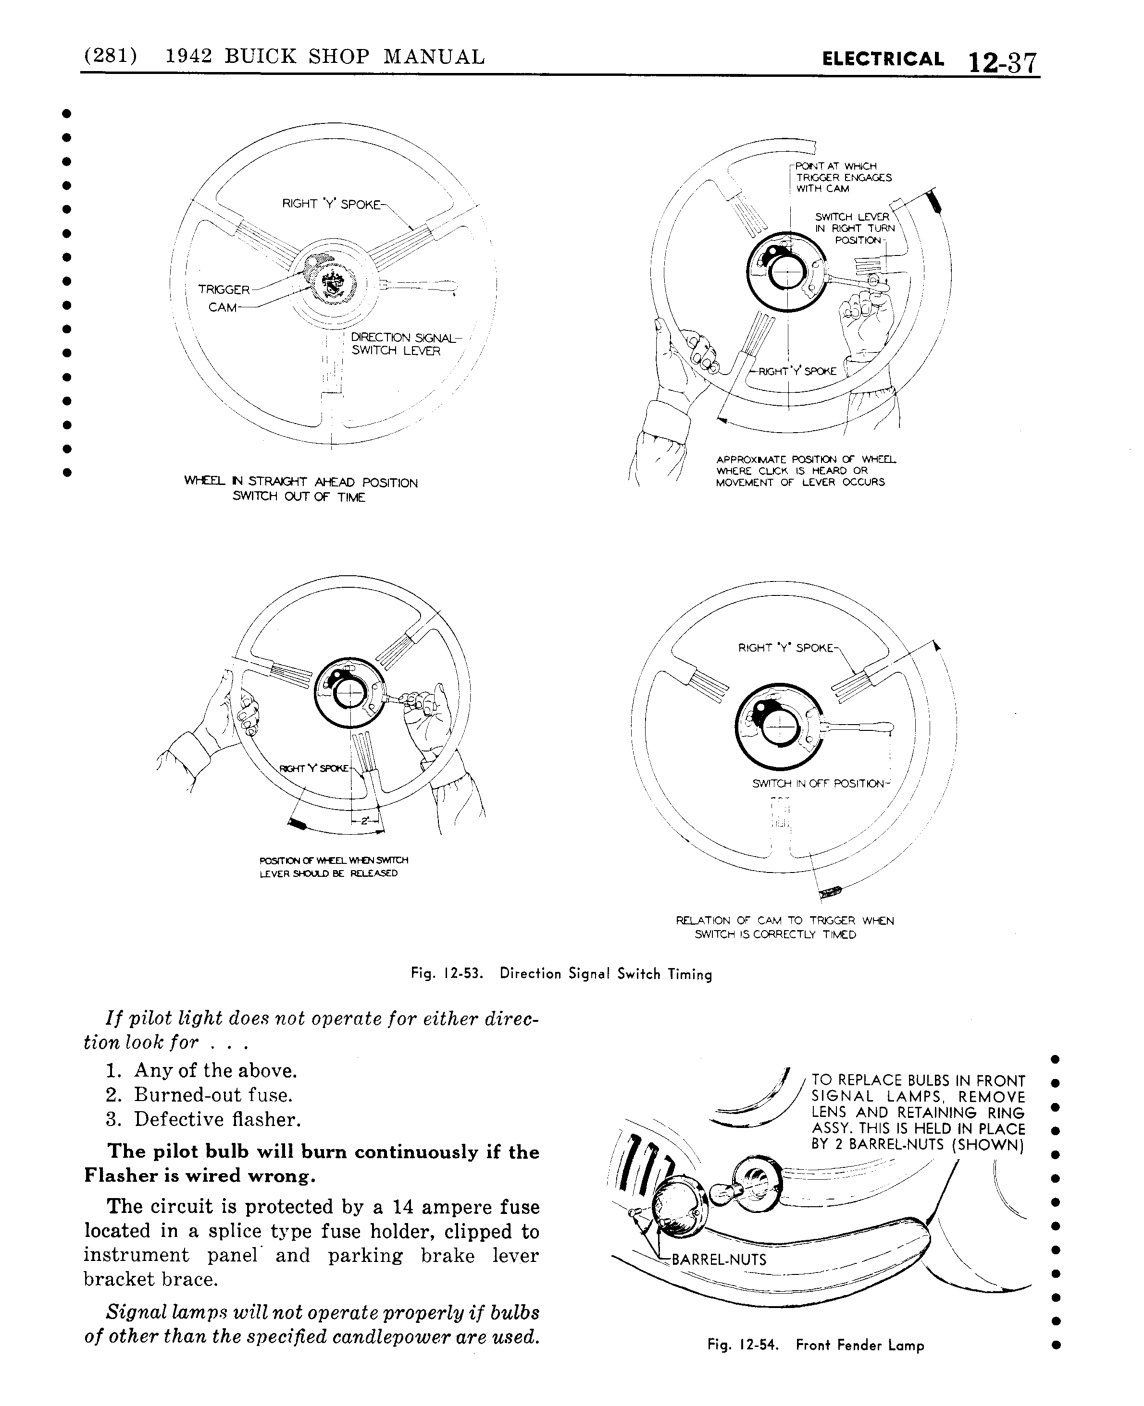 n_13 1942 Buick Shop Manual - Electrical System-037-037.jpg